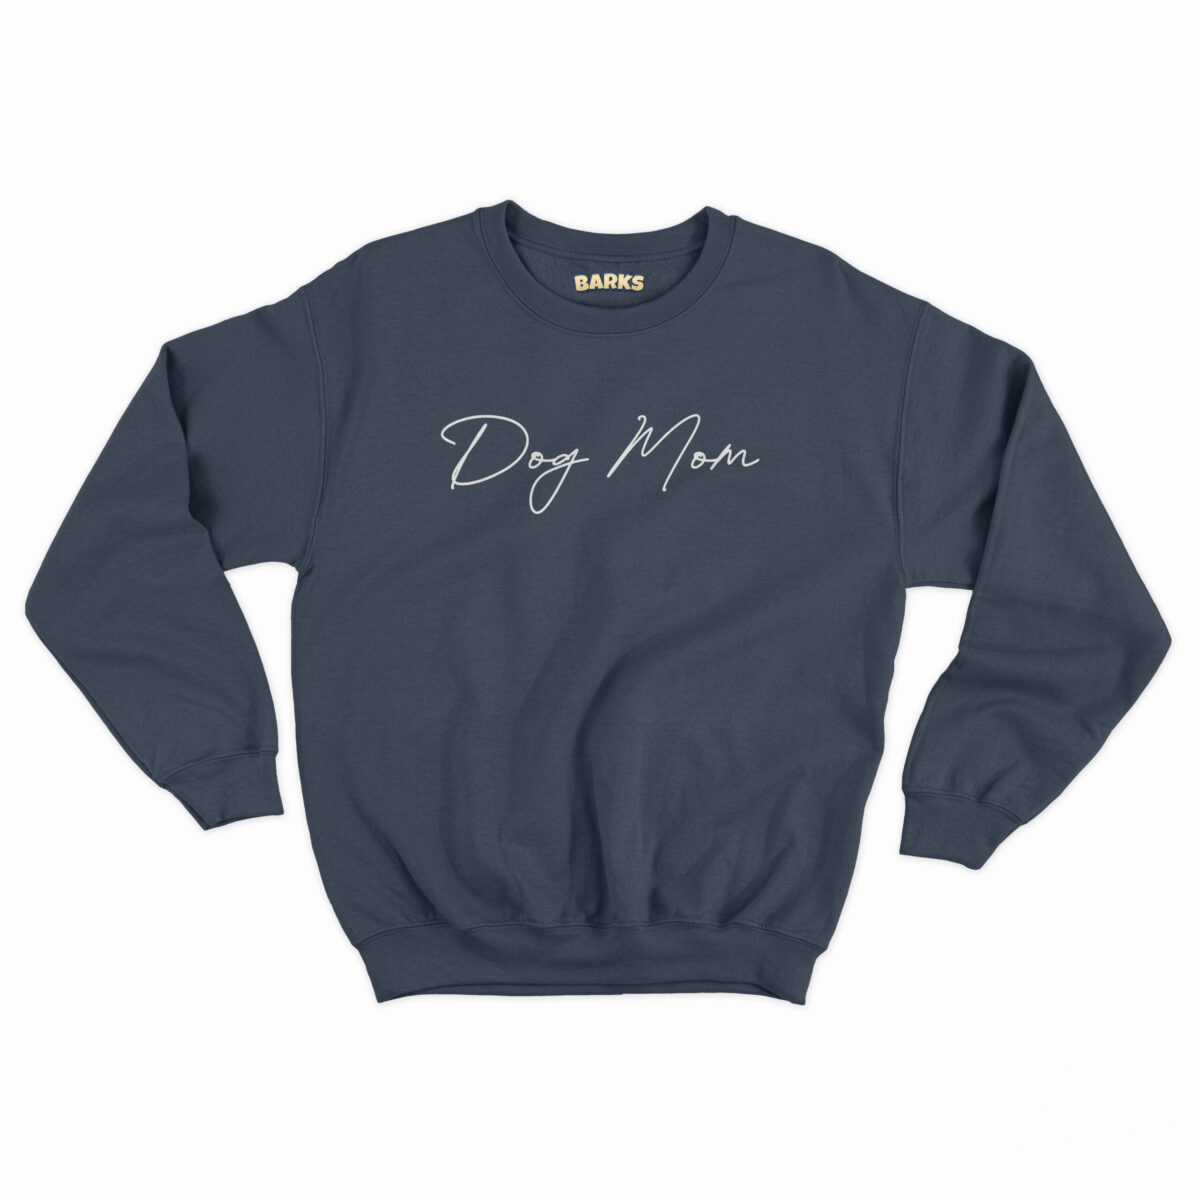 barks sweater dog mom french navy scaled